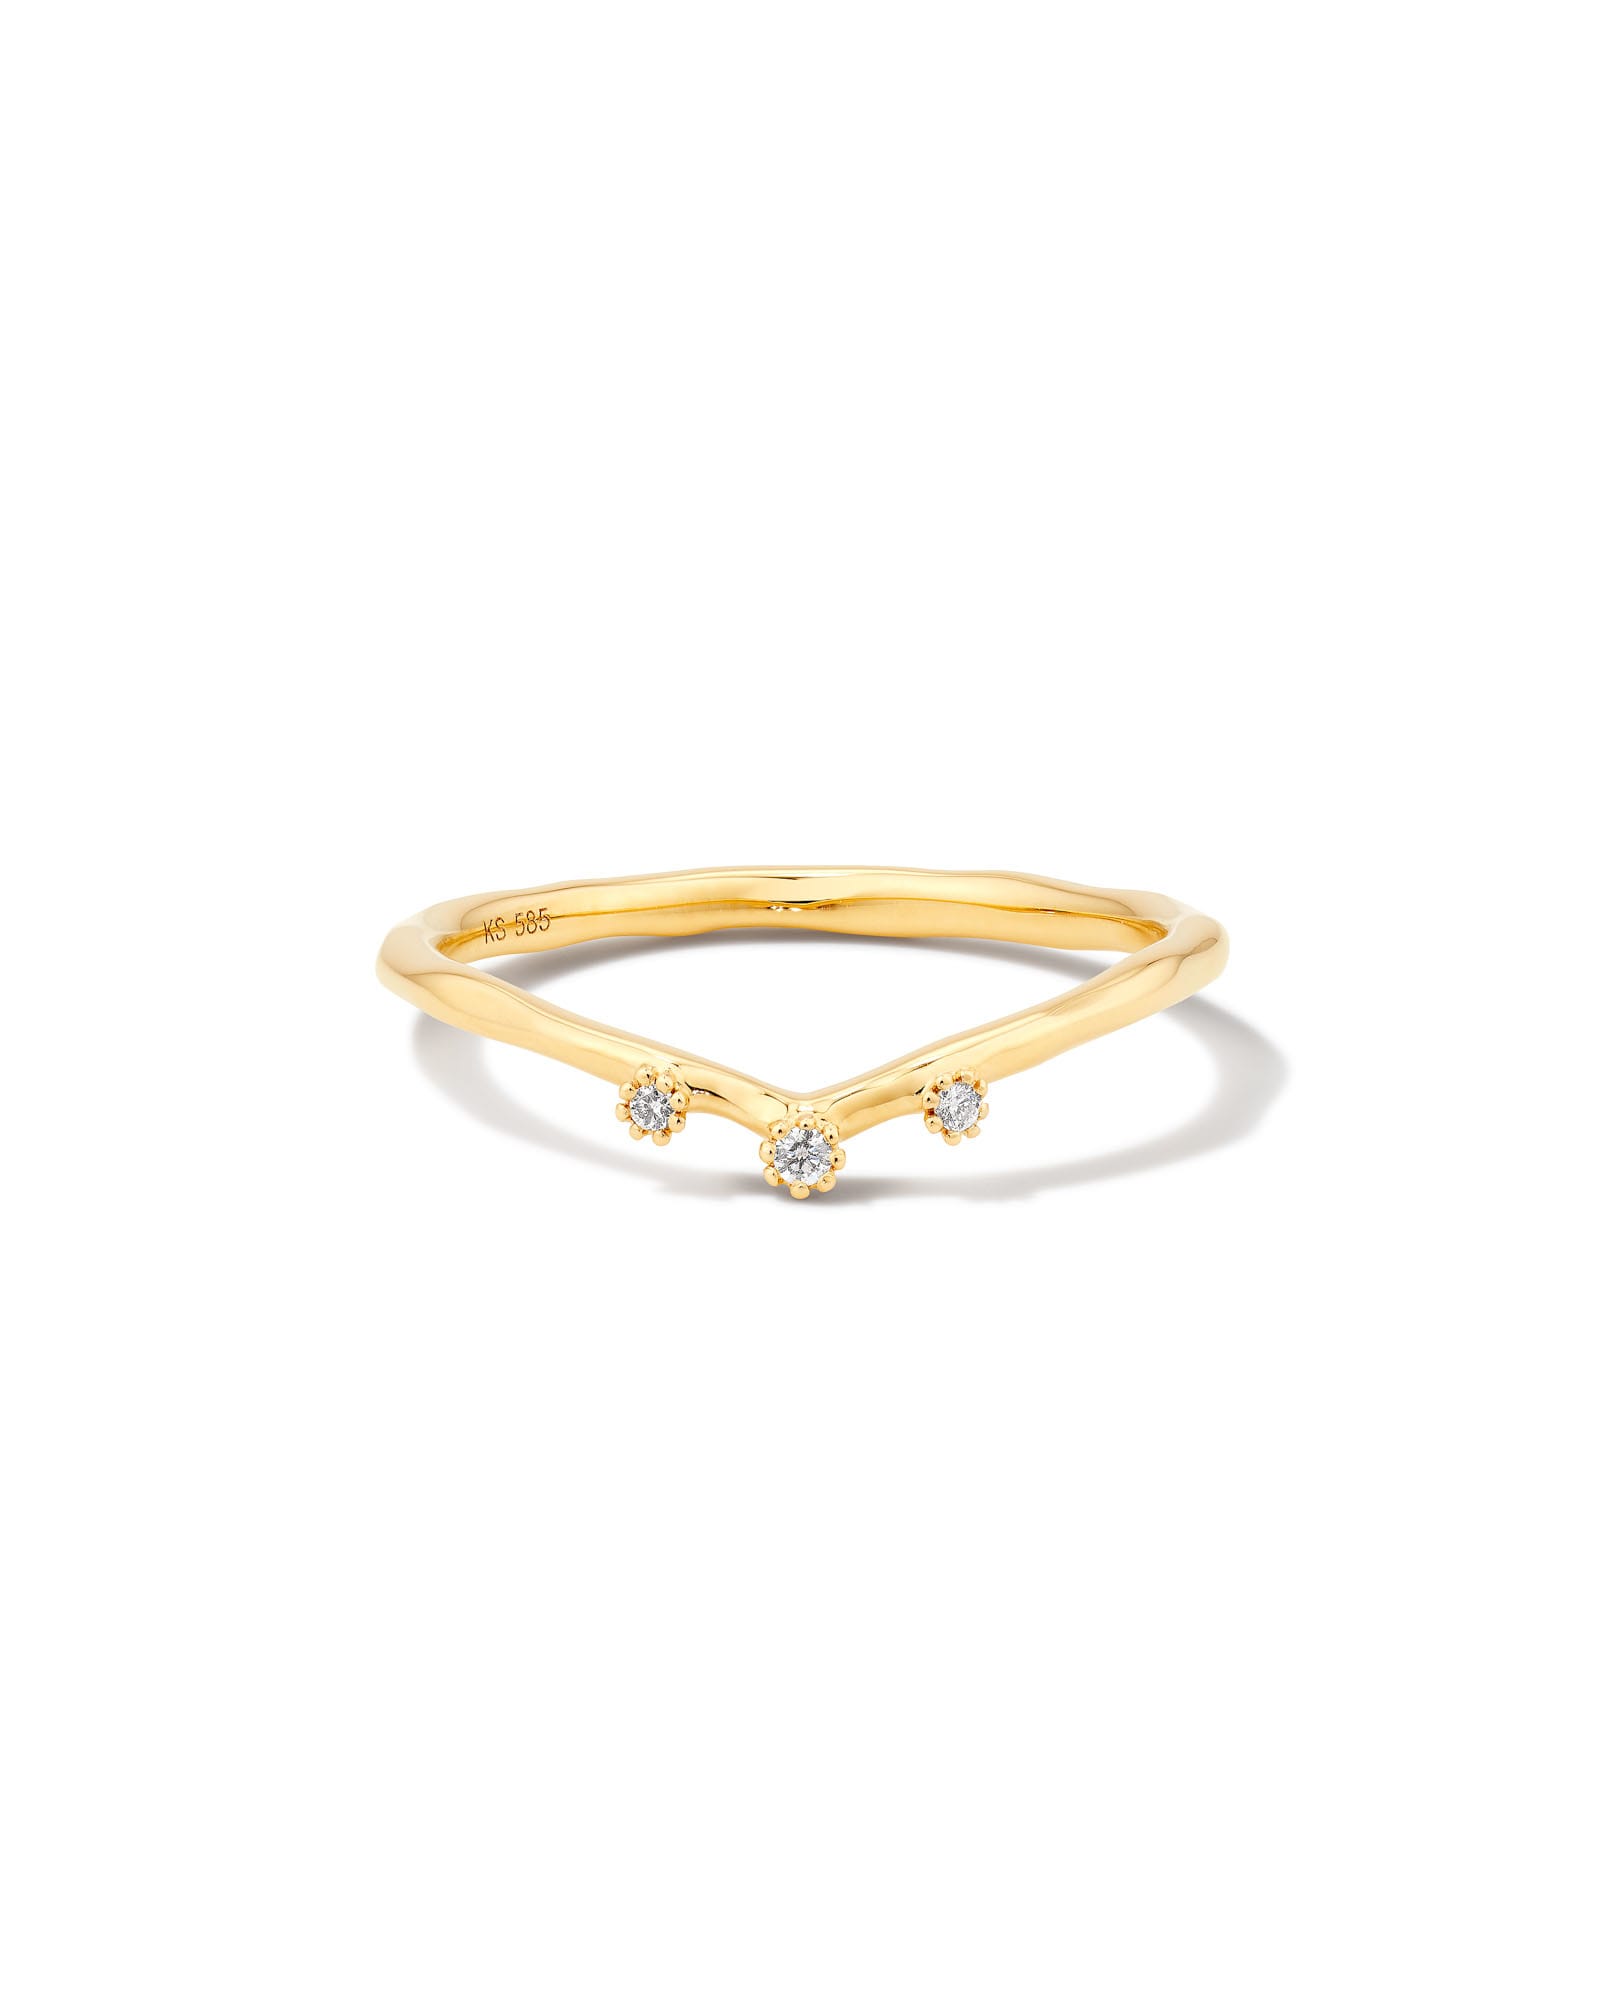 Kendra Scott Noelle 14k Yellow Gold Band Ring in White Diamond | Diamonds